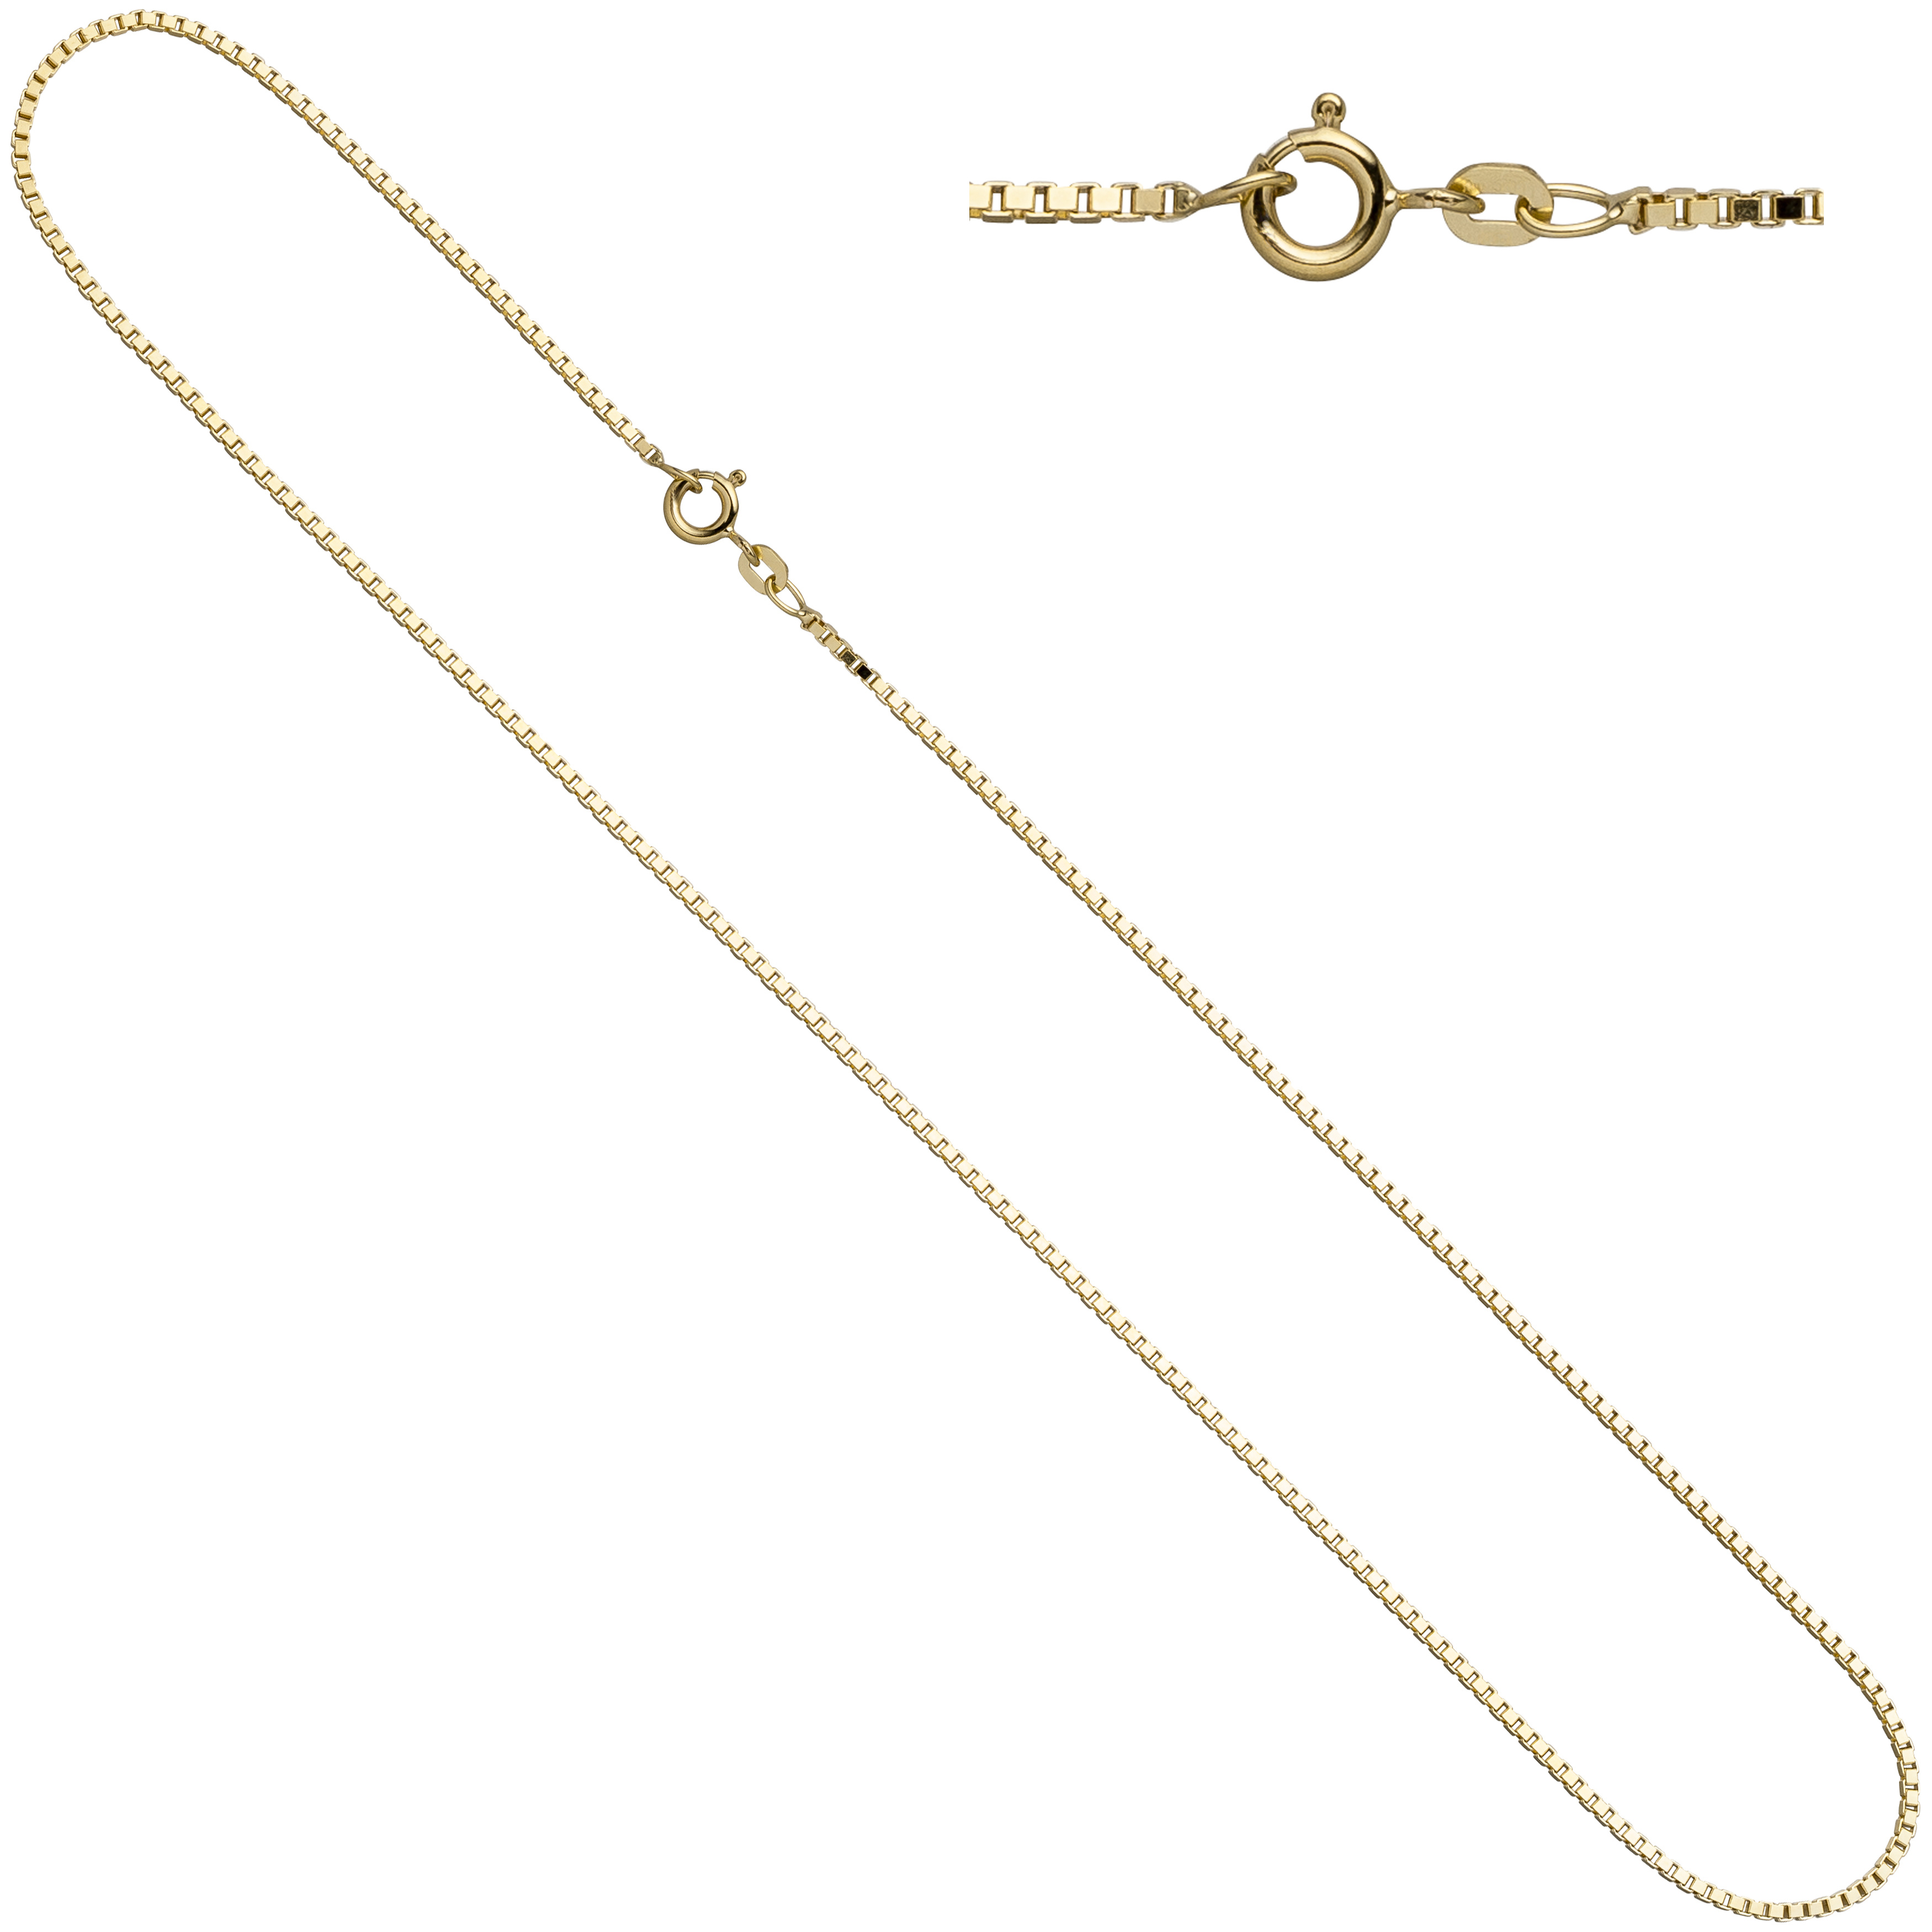 Venezianerkette 333 Gelbgold 1,0 mm 45 cm Gold Kette Halskette Federring